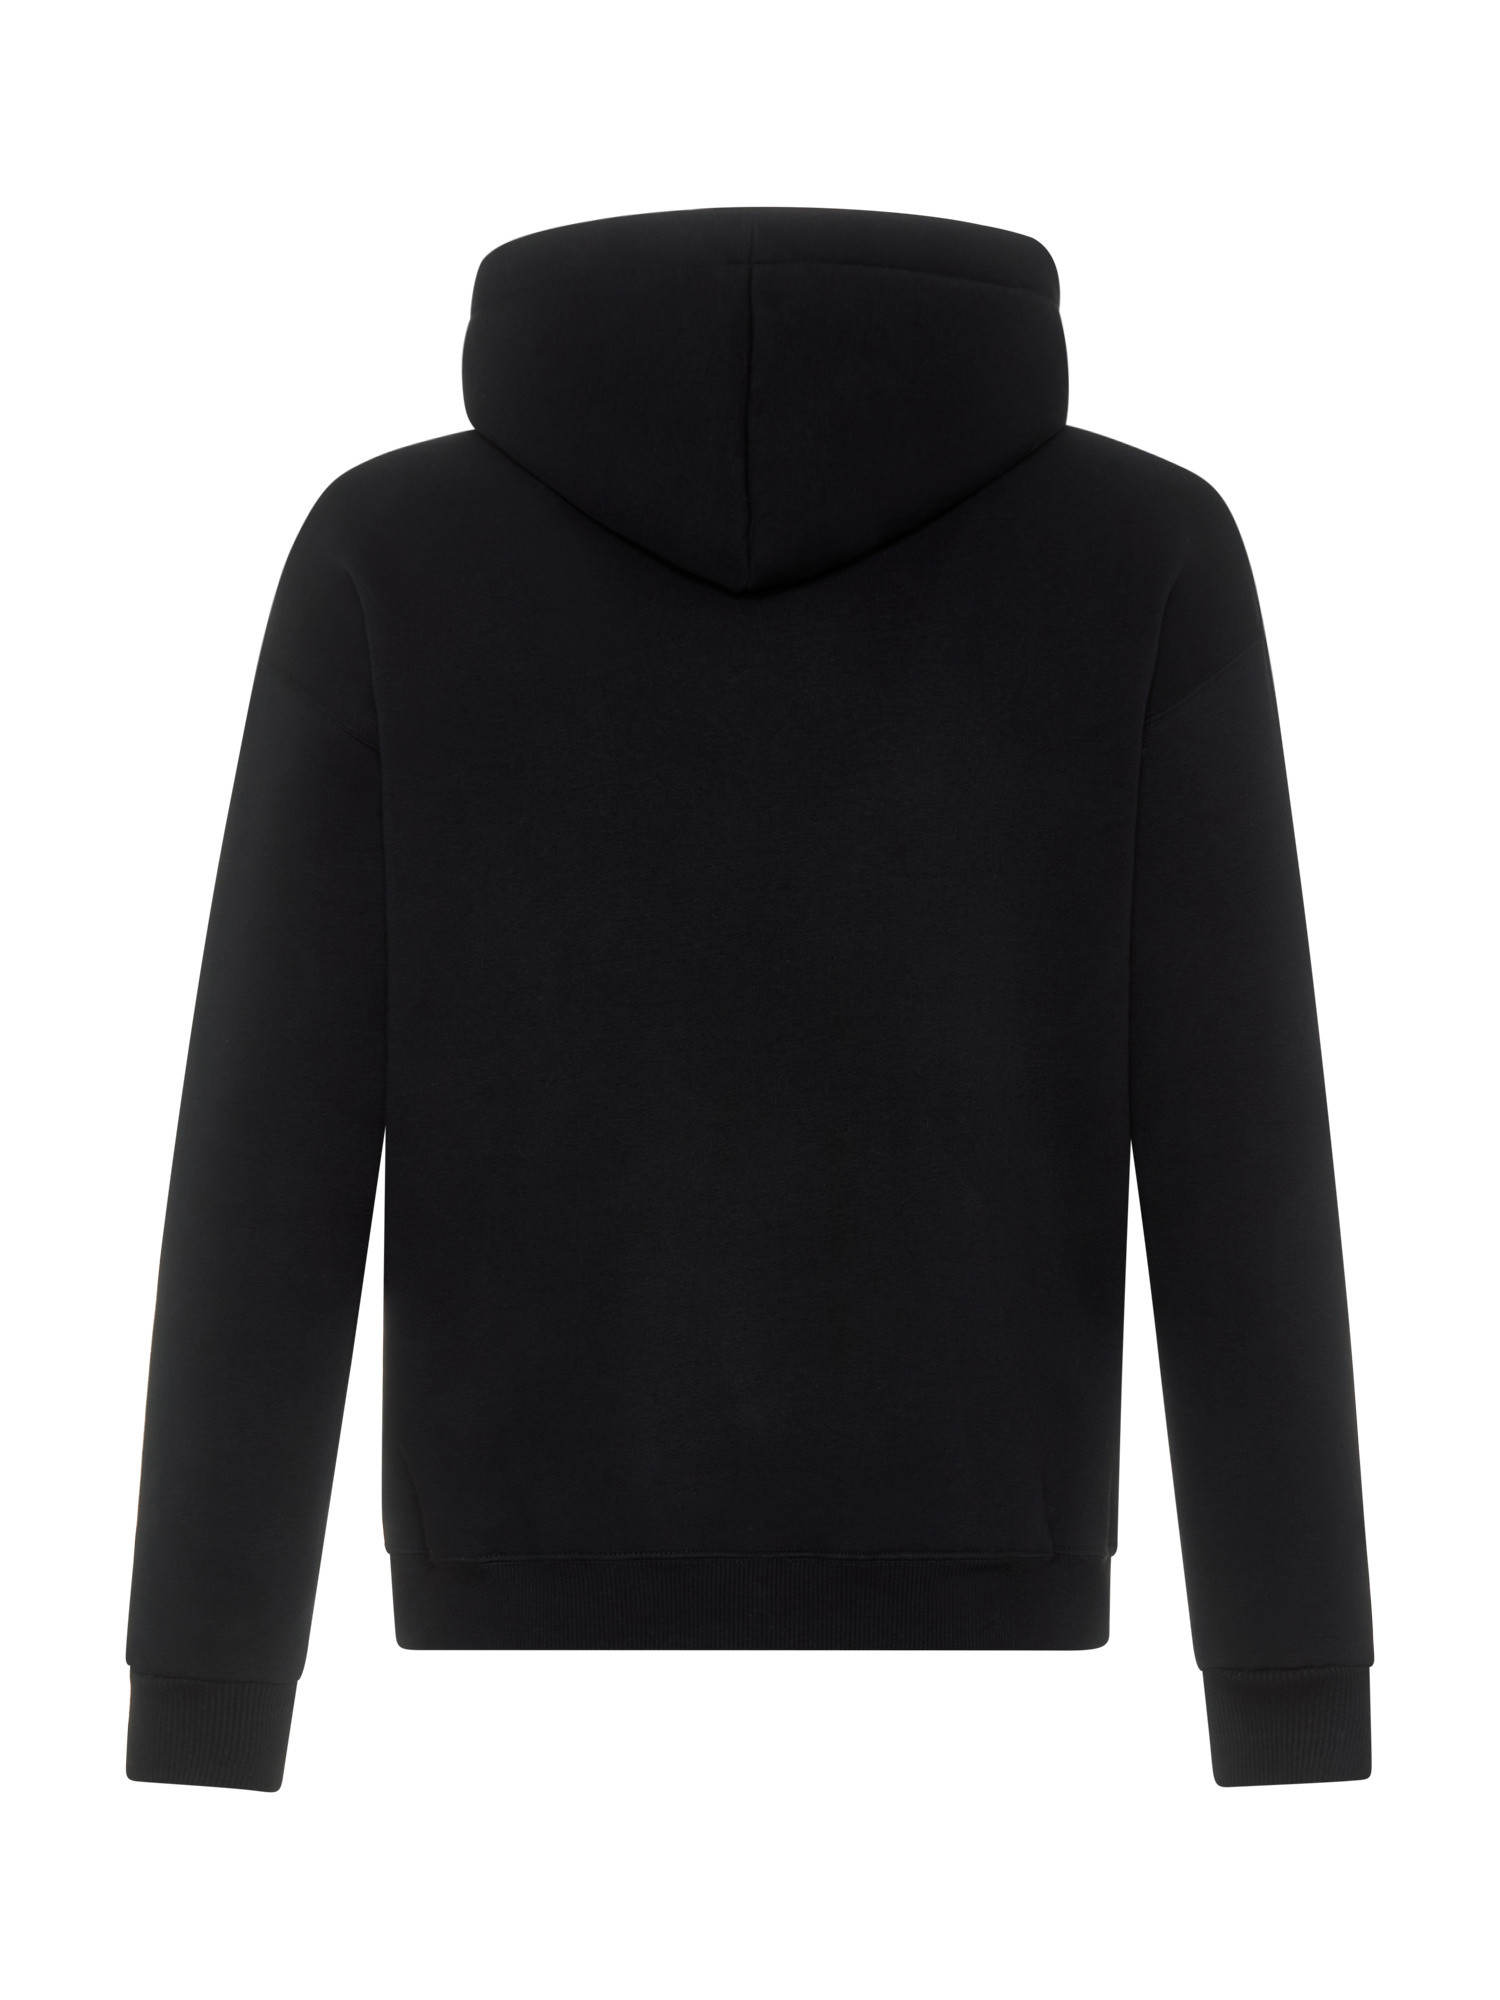 Usual - Octane Hooded Sweatshirt, Black, large image number 1